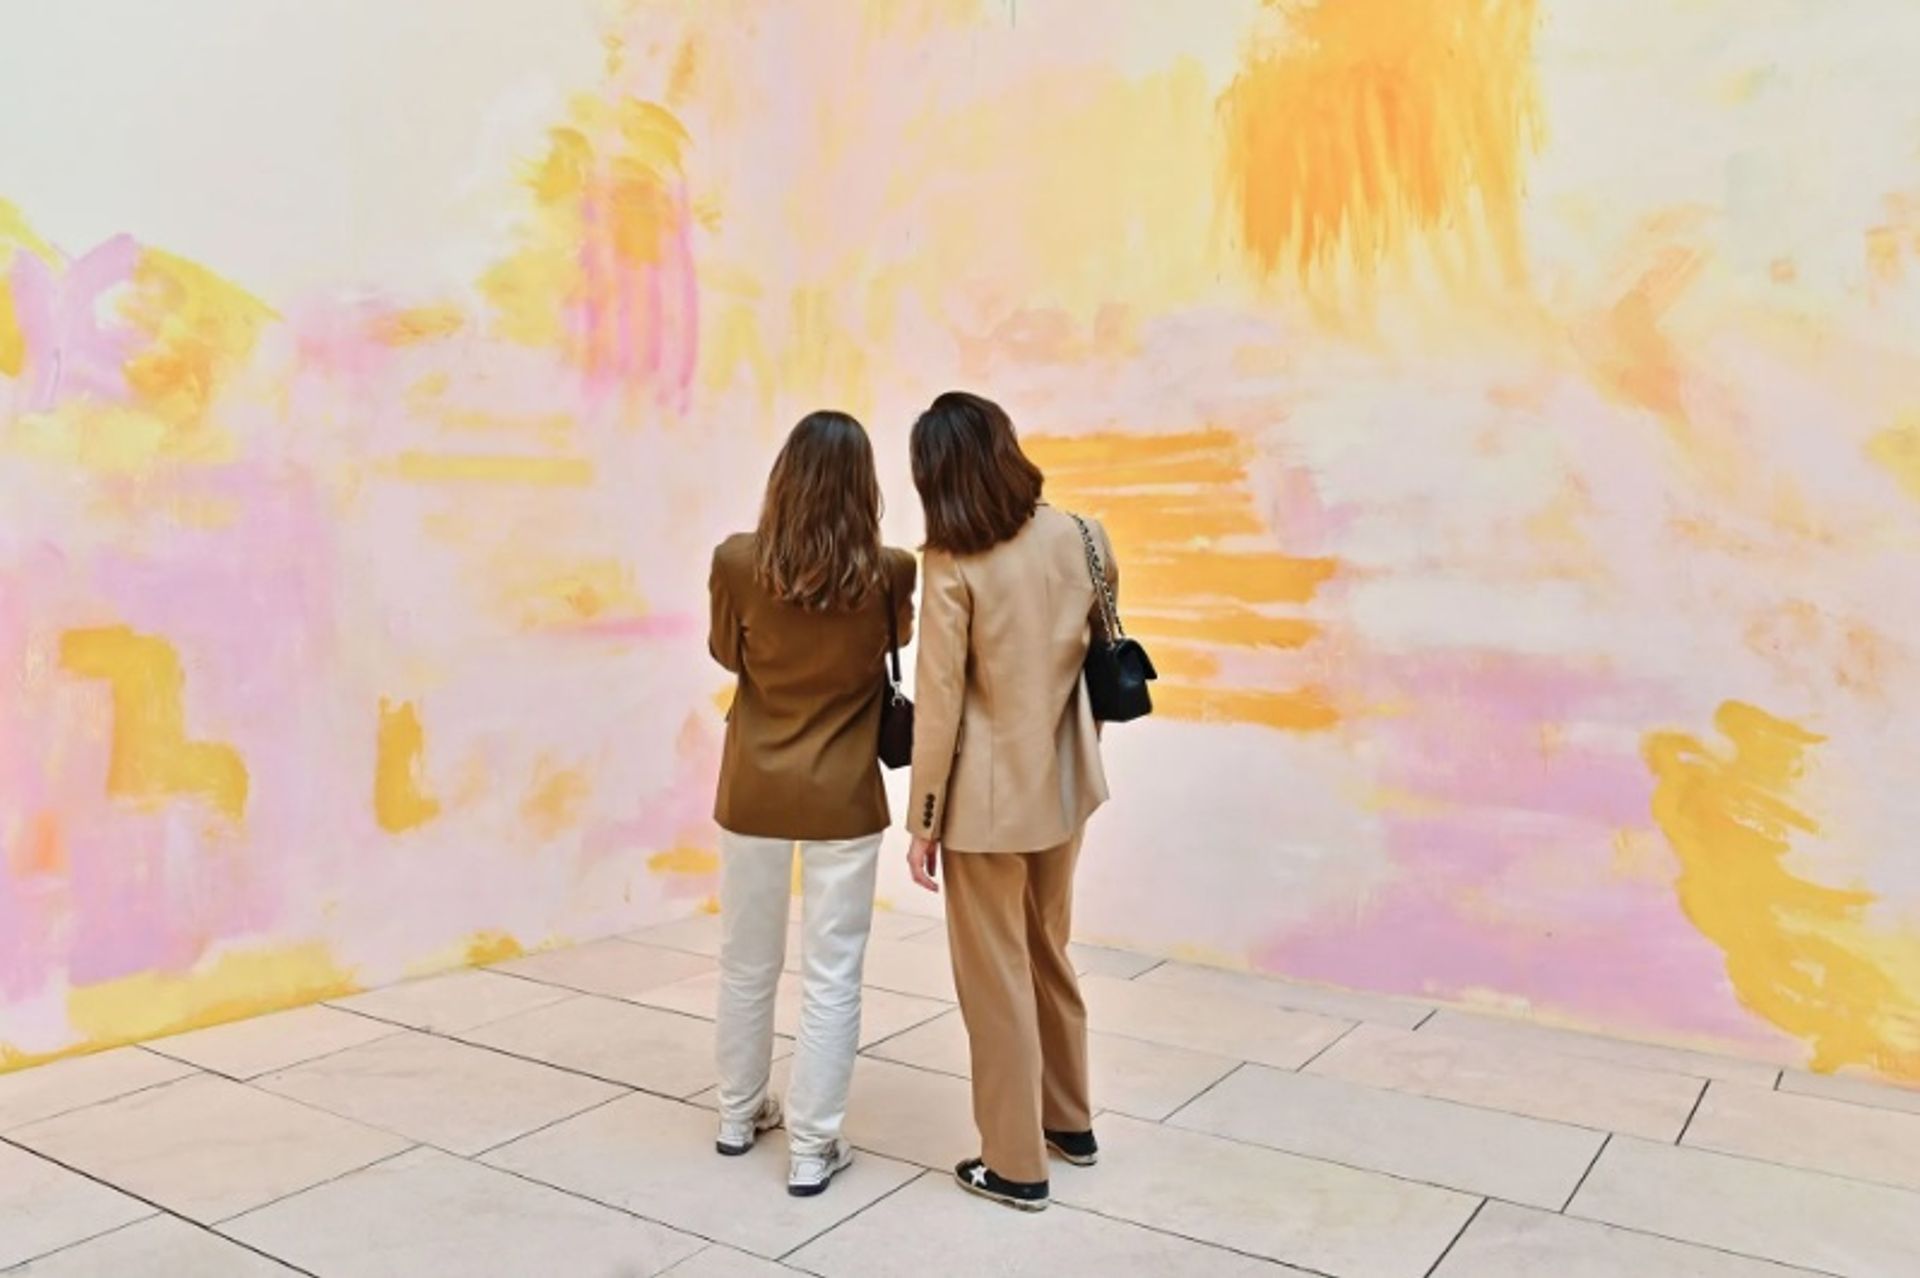 With Sun (2022) של מייגן רוני, ממוקמם בחדר הפתיחה של התערוכה, נצבע בשכבות שנשחקו תחת מלטשת חשמלית 

© מייגן רוני. תמונה © Fondation Louis Vuitton/Jean Picon/SAYWHO